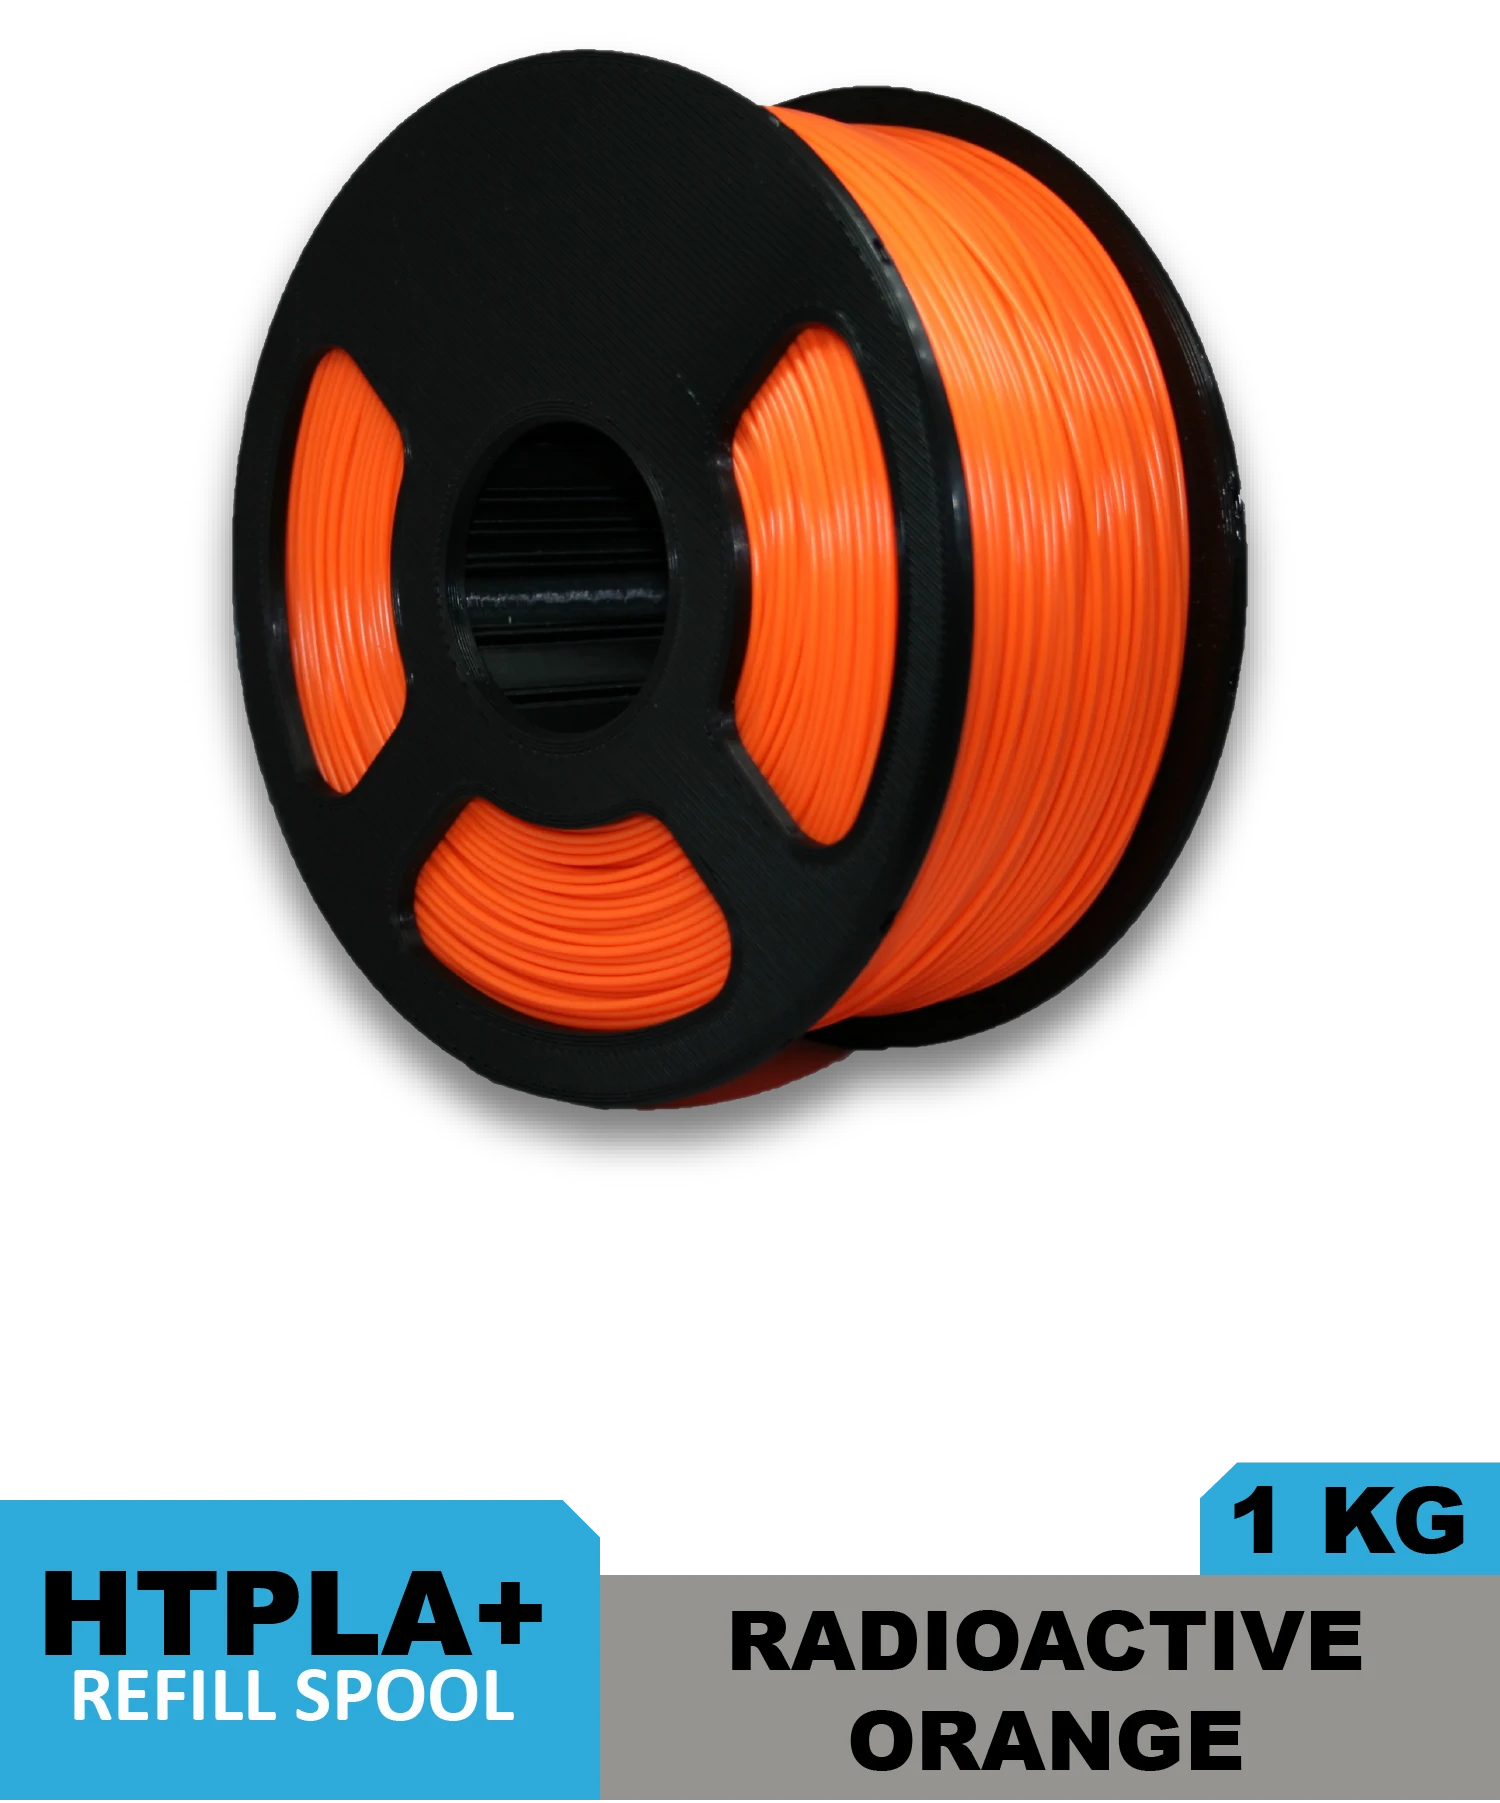 HTPLA - Radioactive Orange